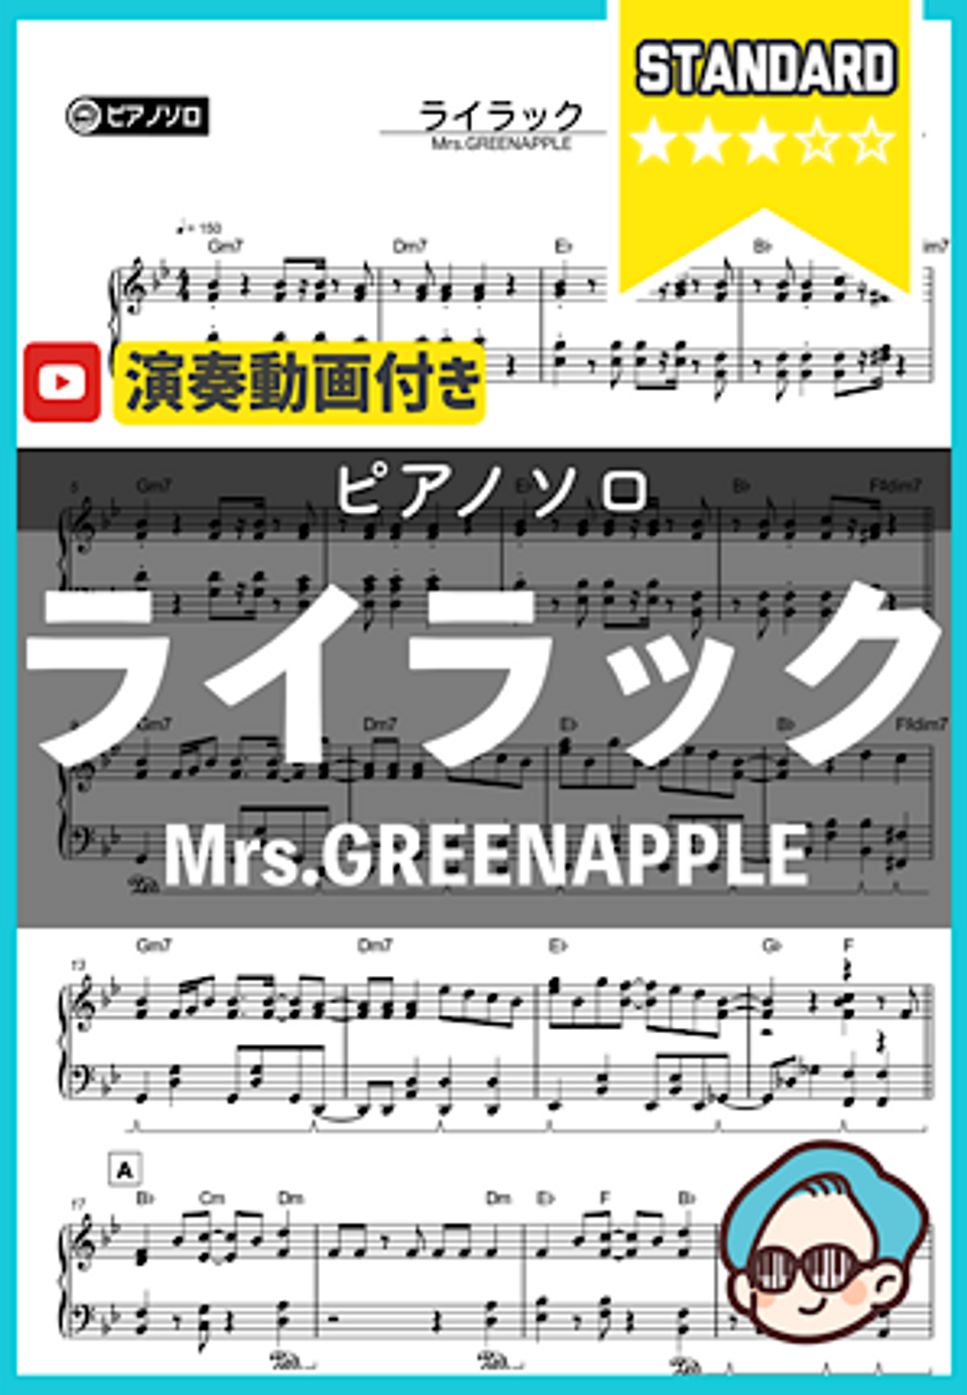 Mrs.GREENAPPLE - ライラック by シータピアノ